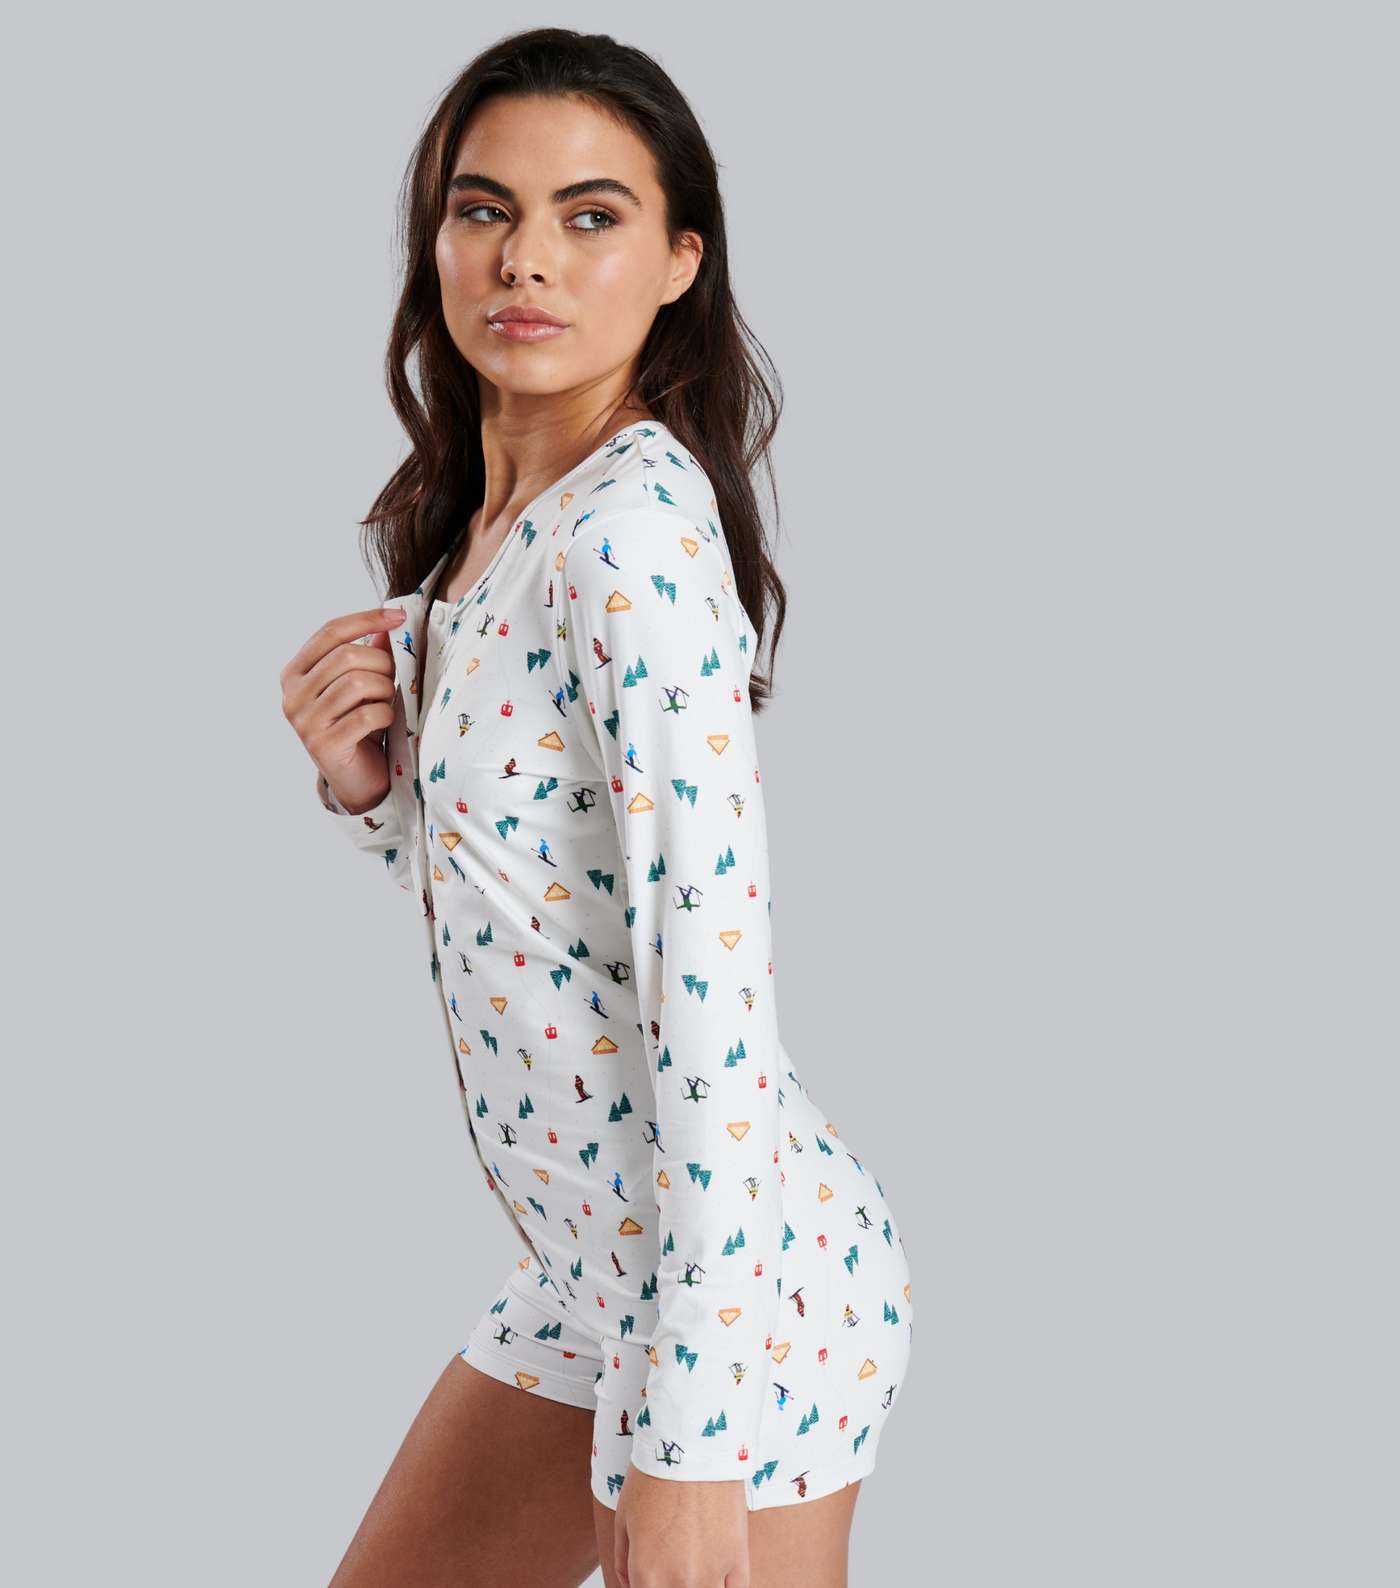 Loungeable White Pyjama Romper with Ski Print Image 2